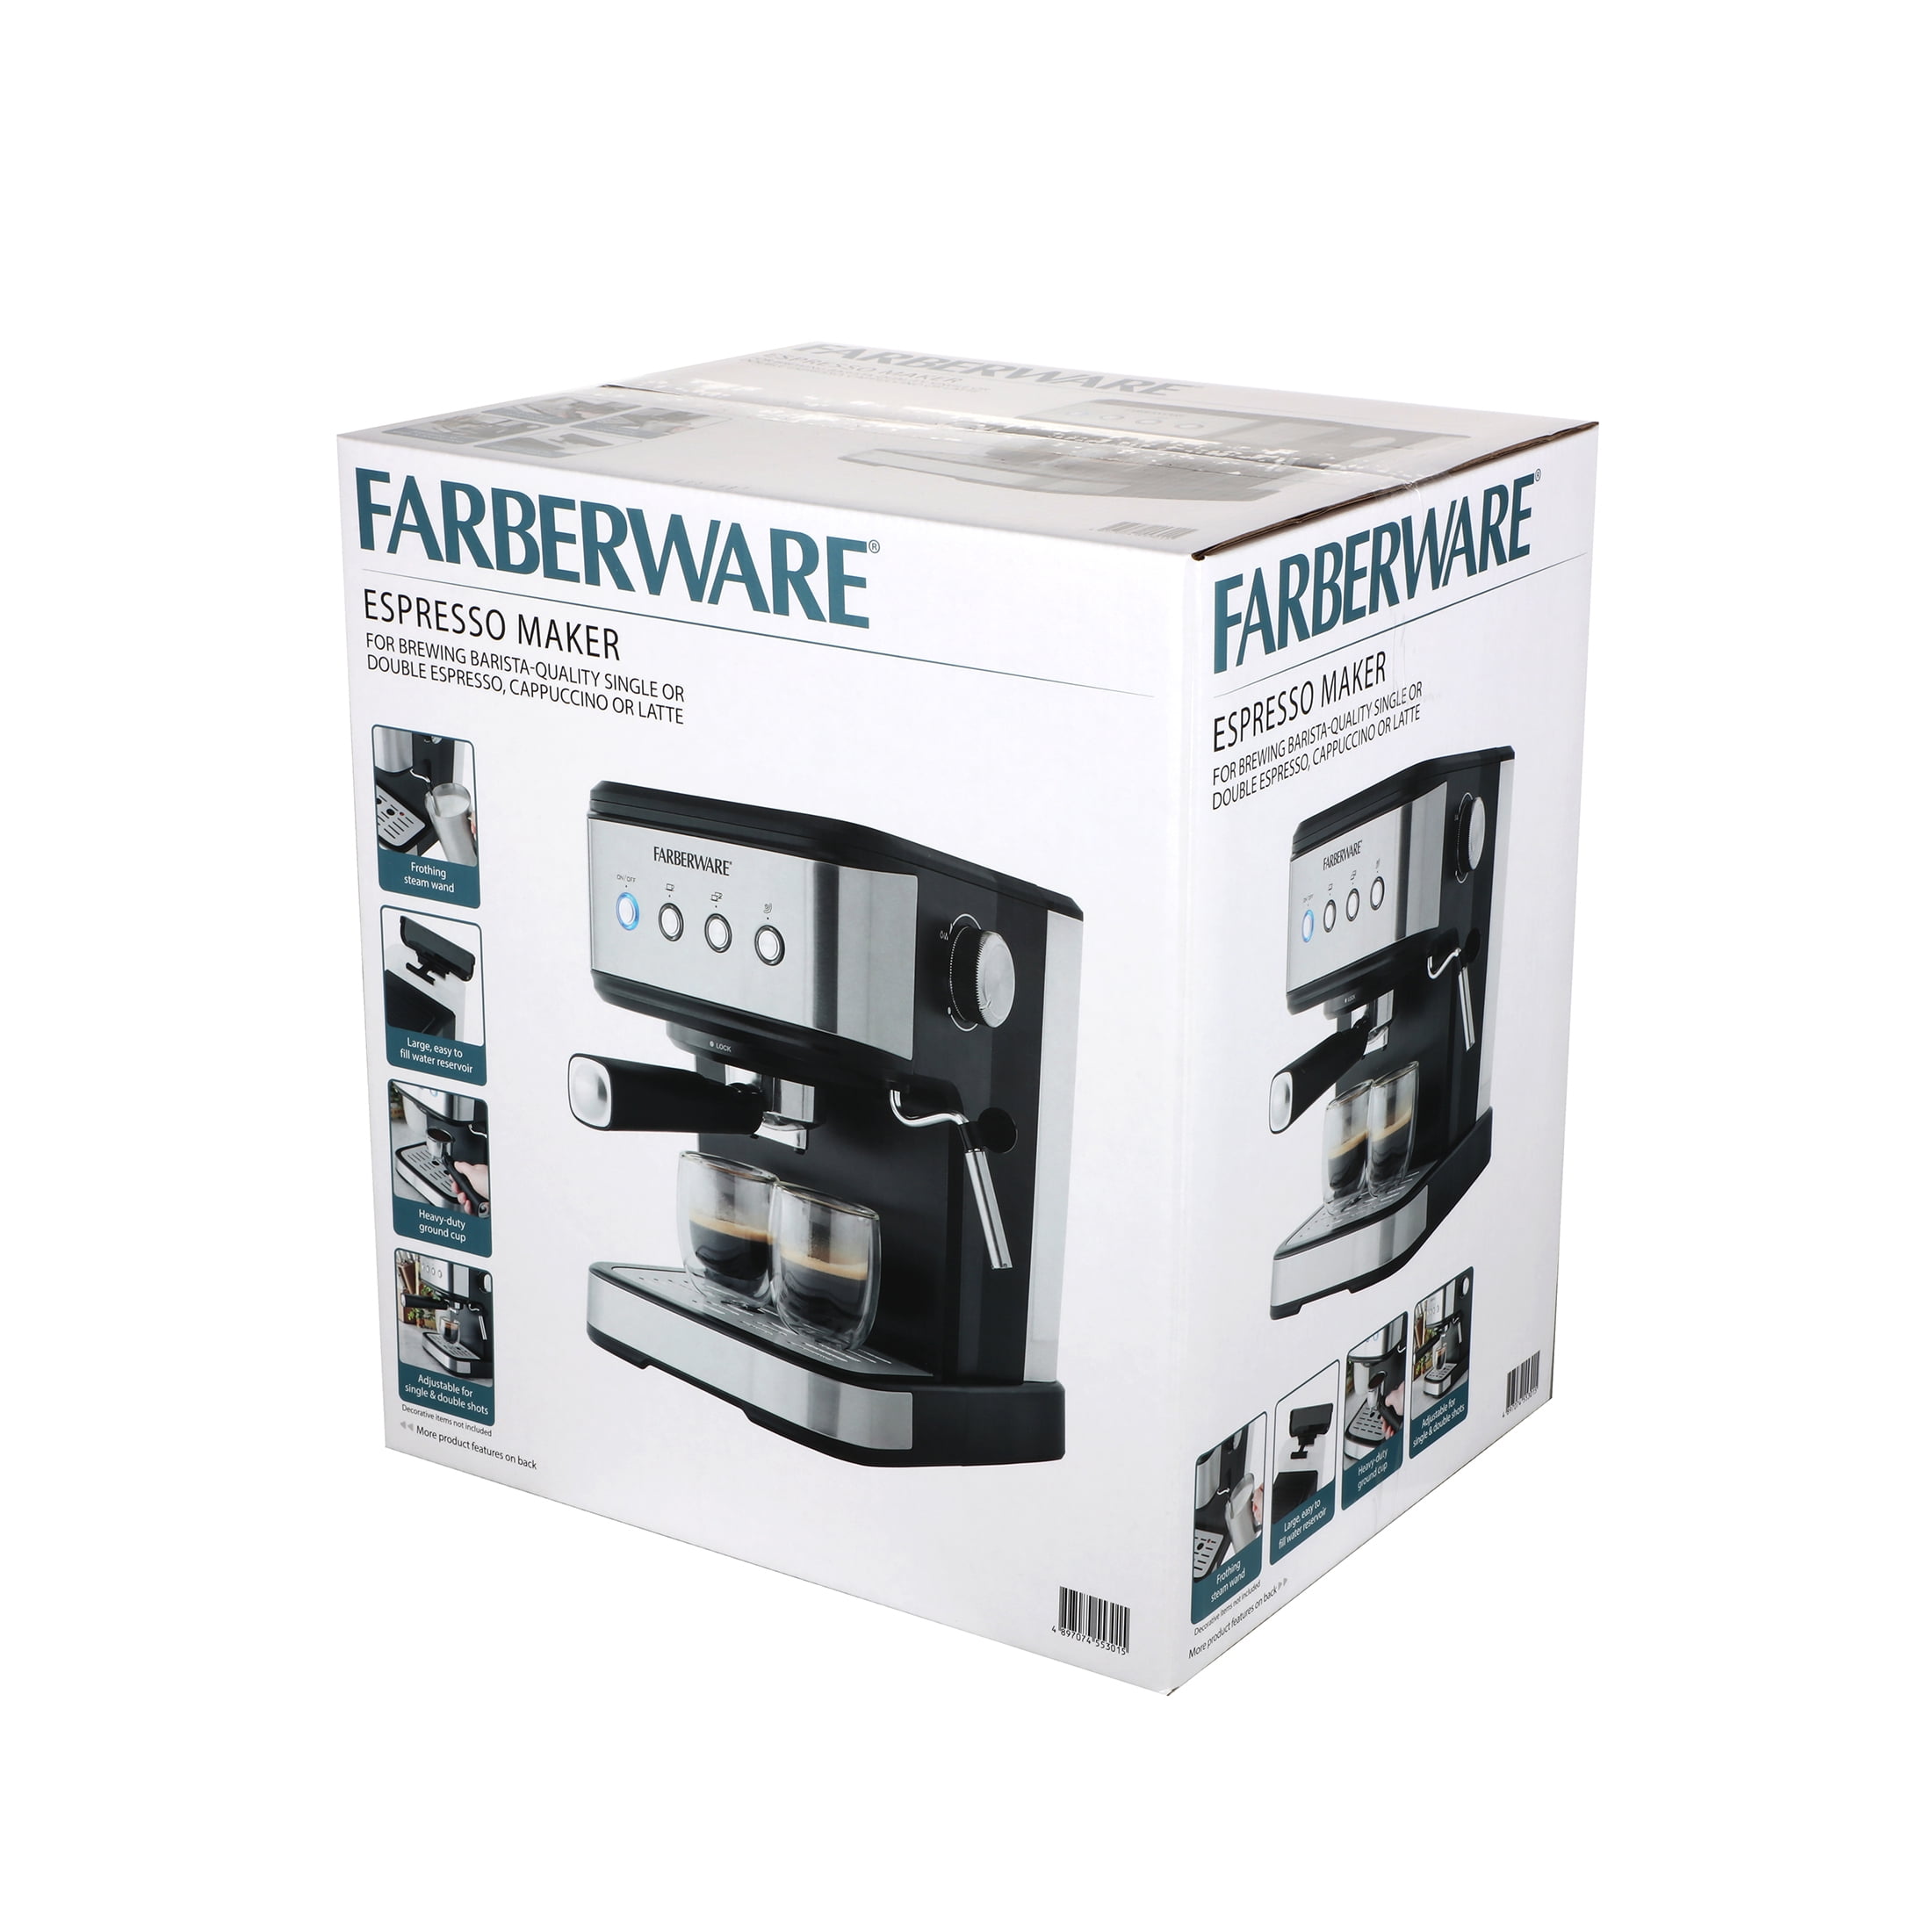 Farberware 1.5L 20 Bar Espresso Maker with Removable Water Tank, Silver and  Black, New Condition 